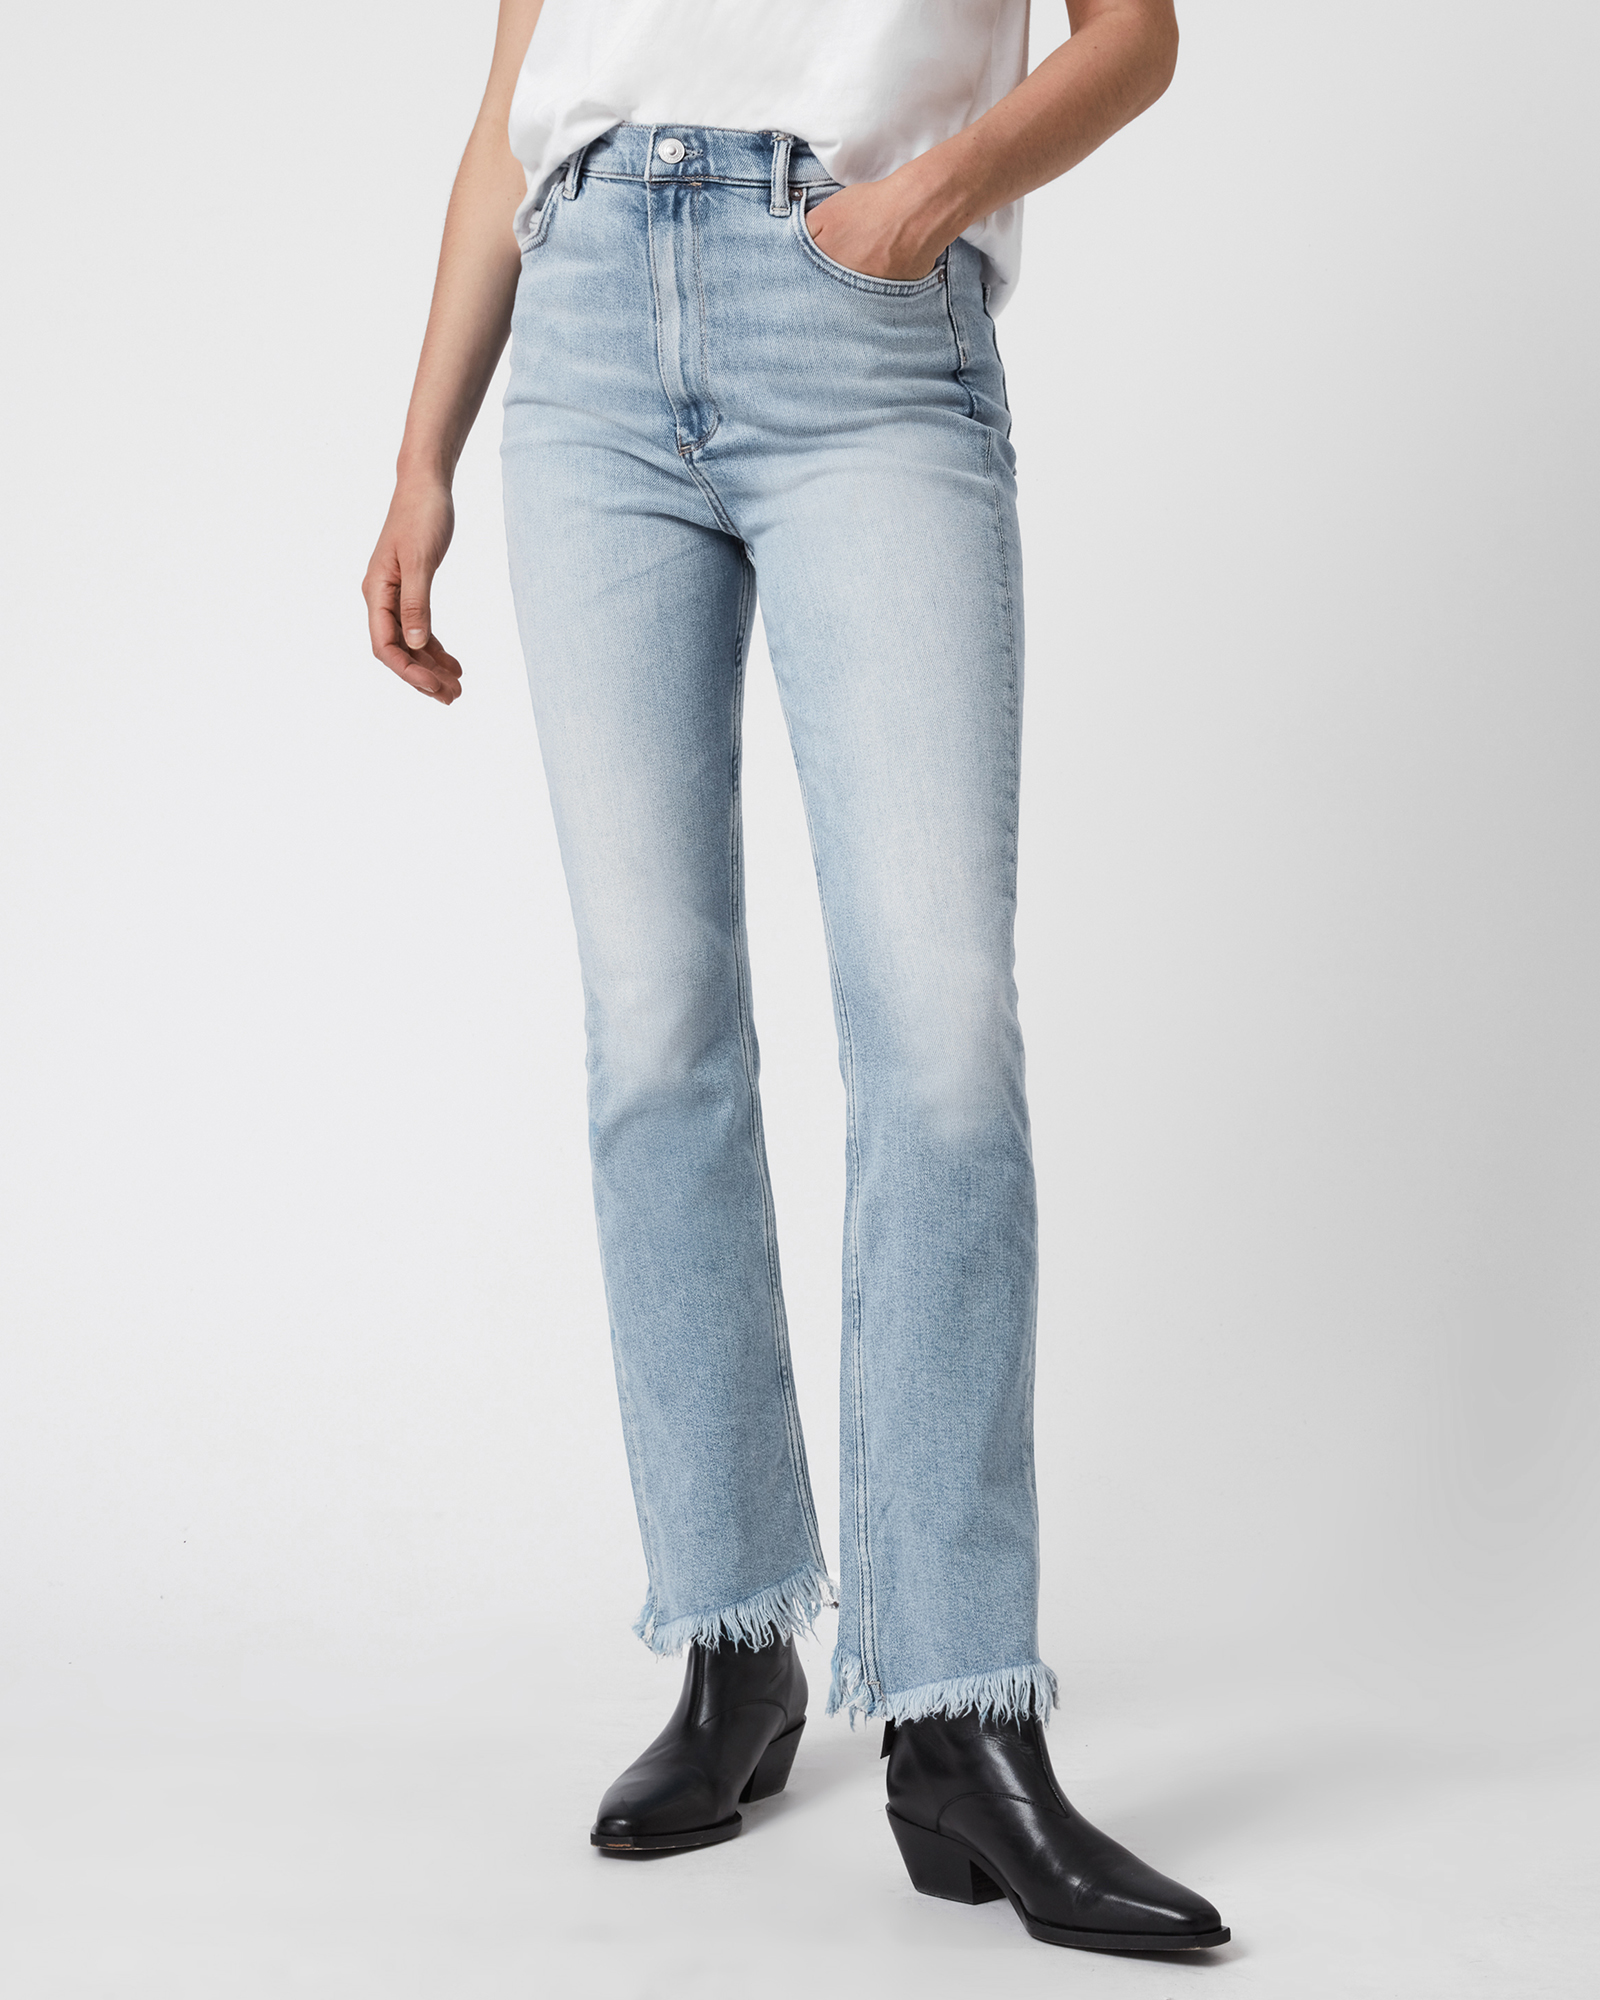 AllSaints Women's Cotton Ciara High-Rise Bootcut Jeans, Blue, Size: 26